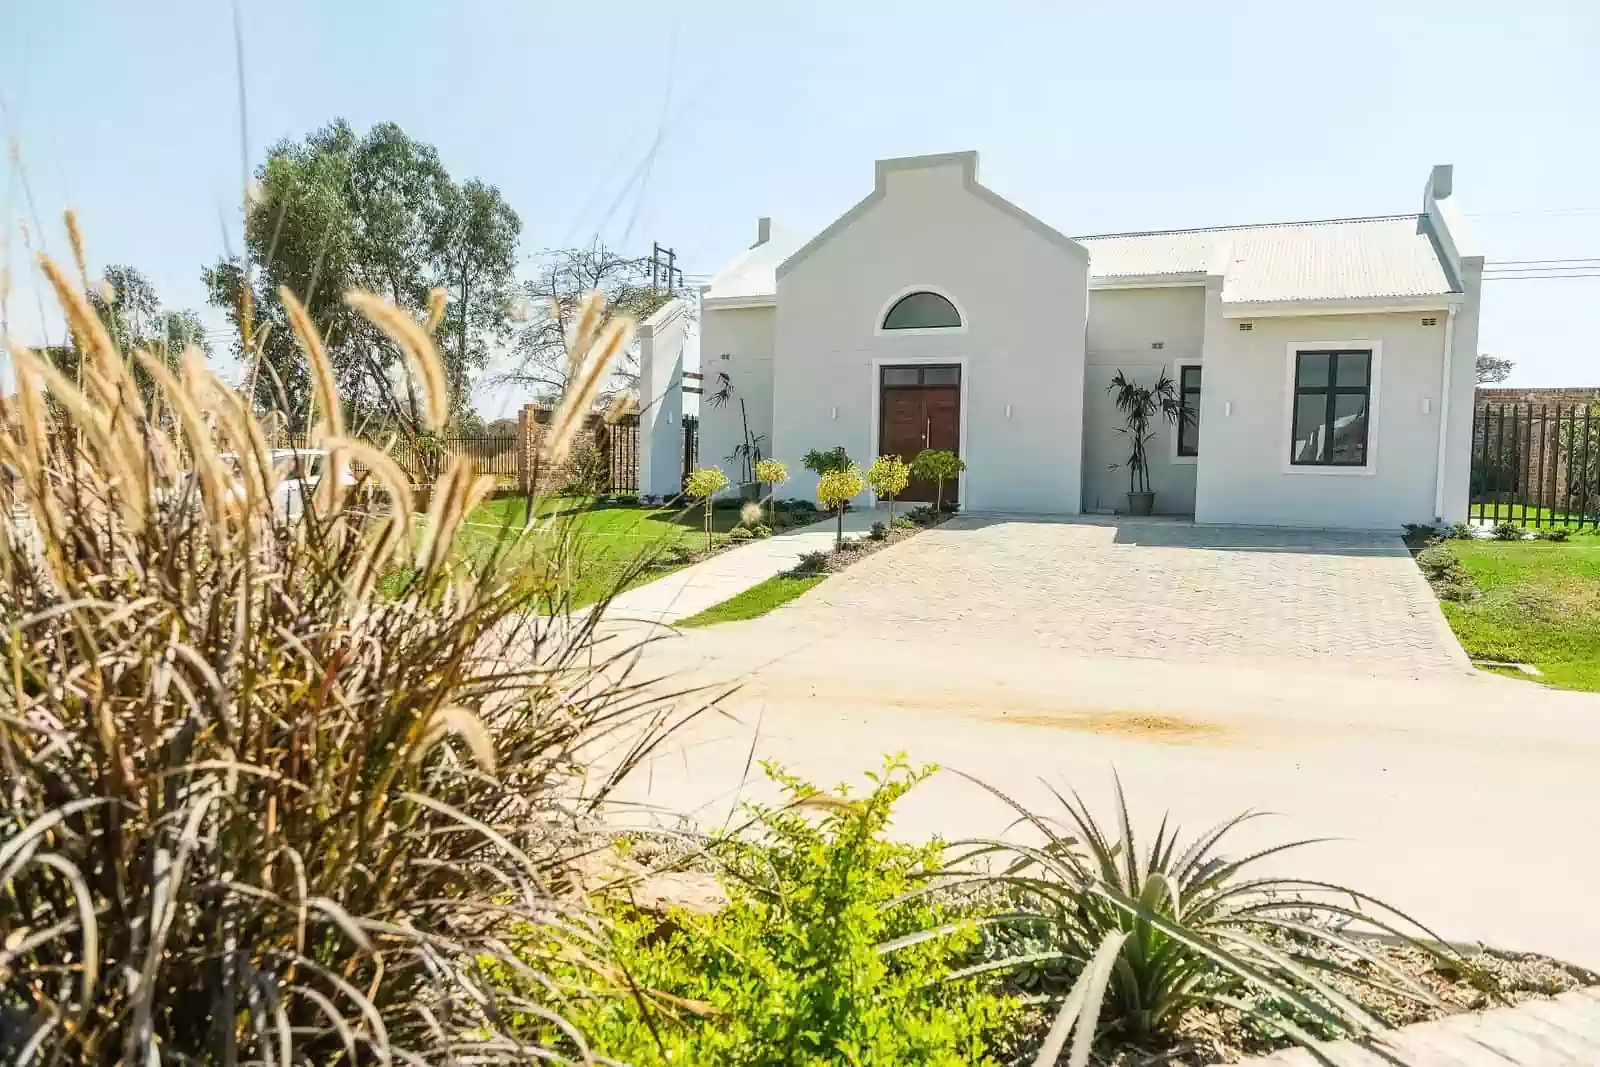 Cape dutch home in luxury housing development in Arlington, Harare. Design by local architect